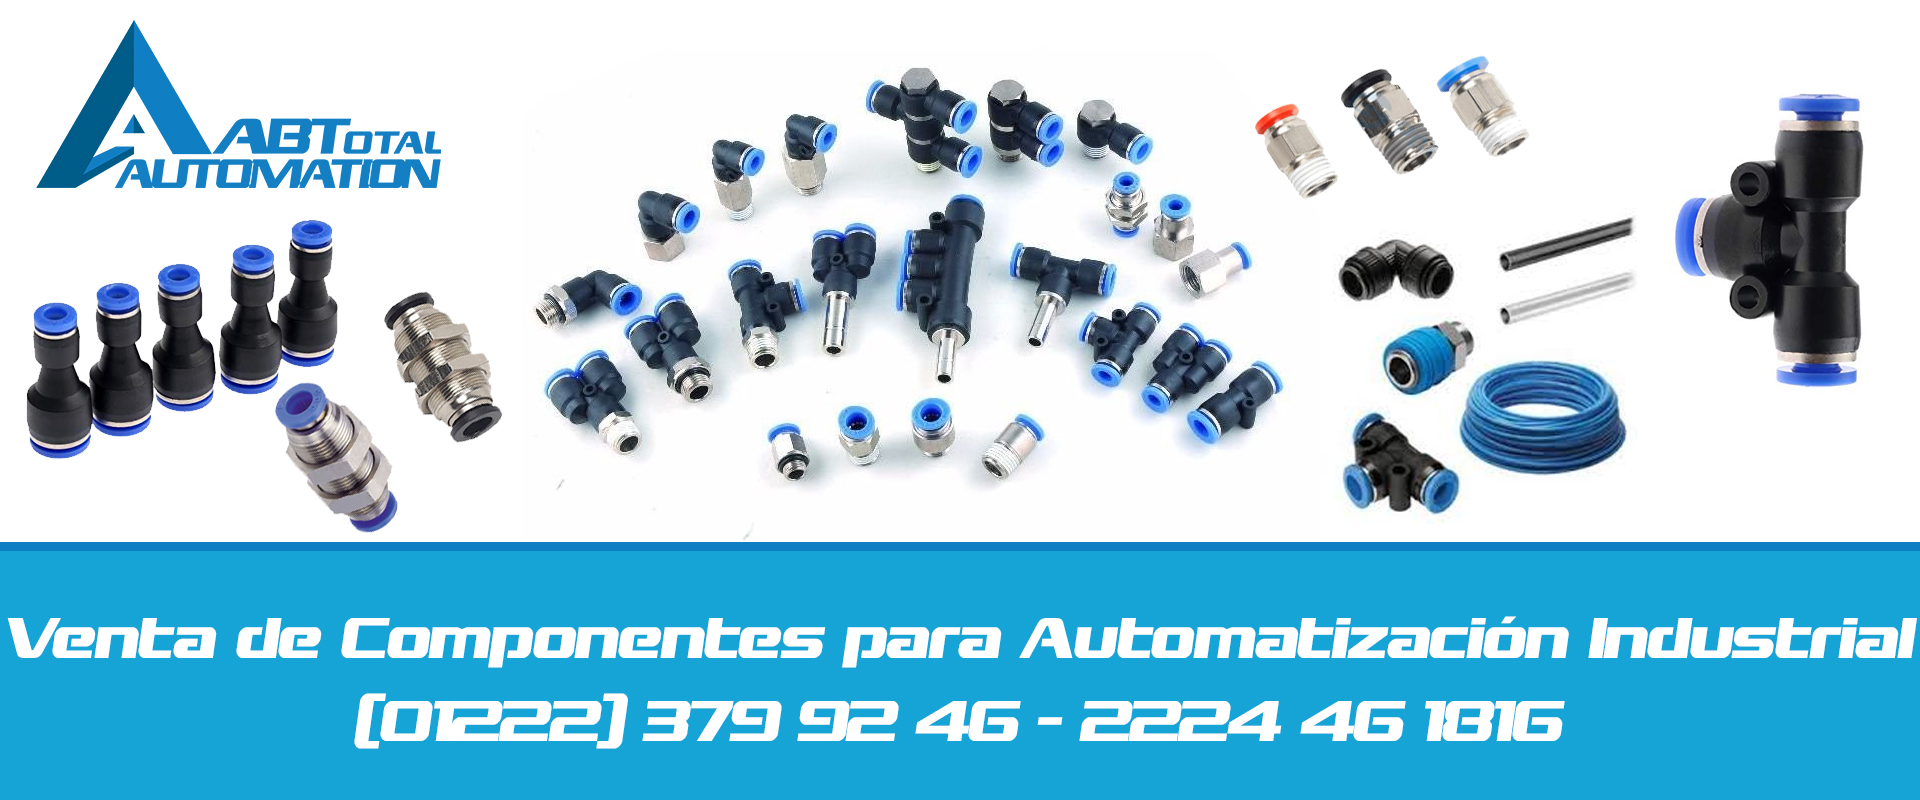 Venta de Componentes para Automatización en Puebla Mexico Tlaxcala